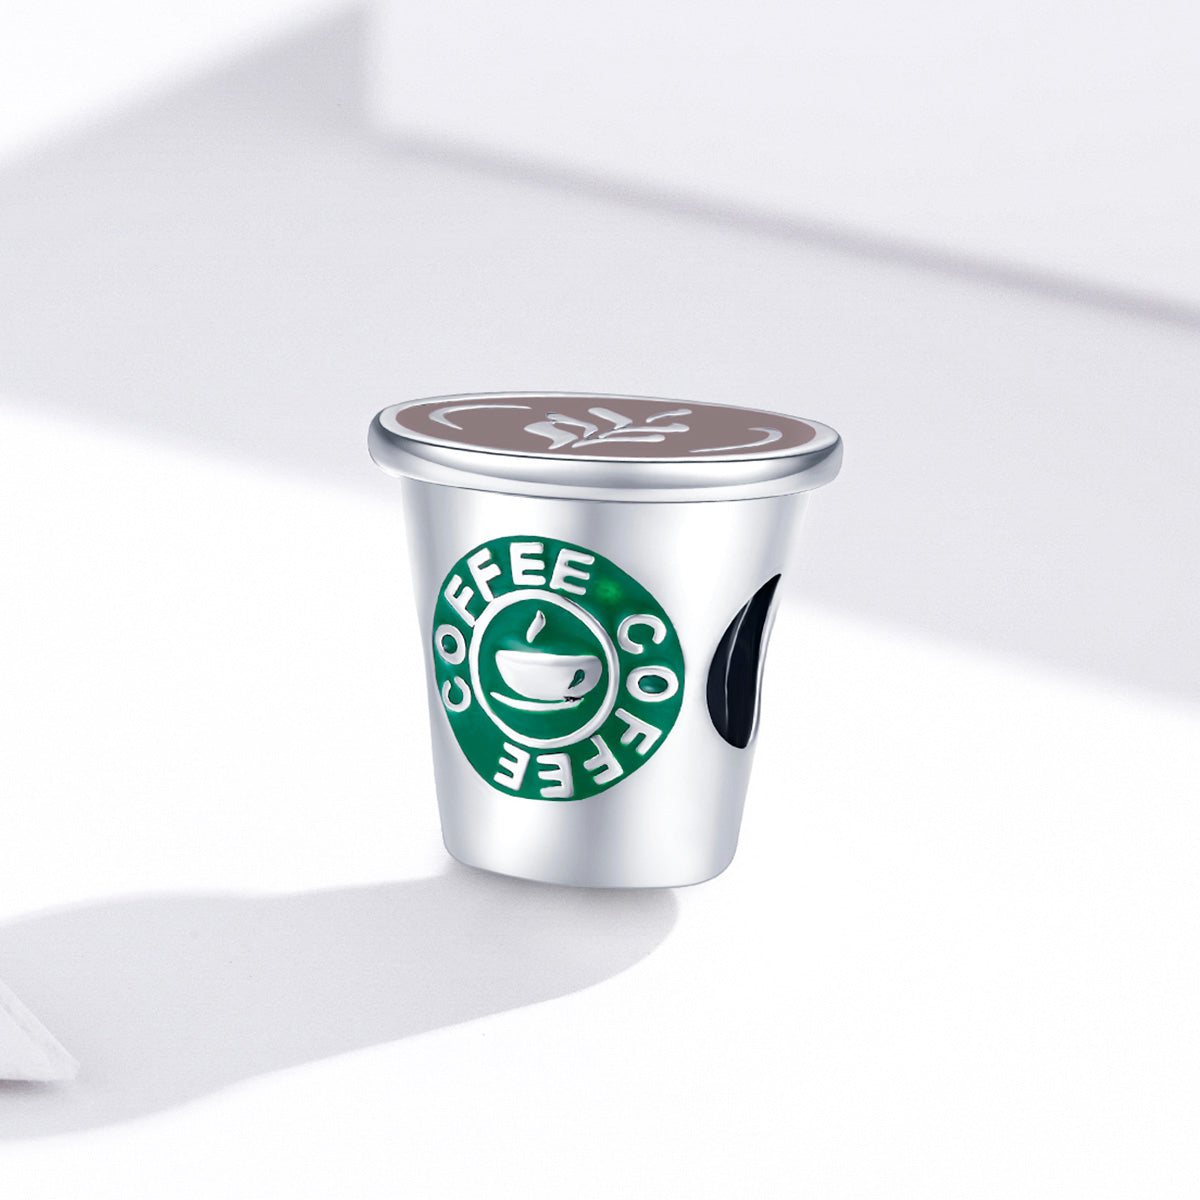 Sterling 925 Silver Charm The Starbucks Coffee Bead Pendant Fits Pandora Charm and European Charm Bracelet